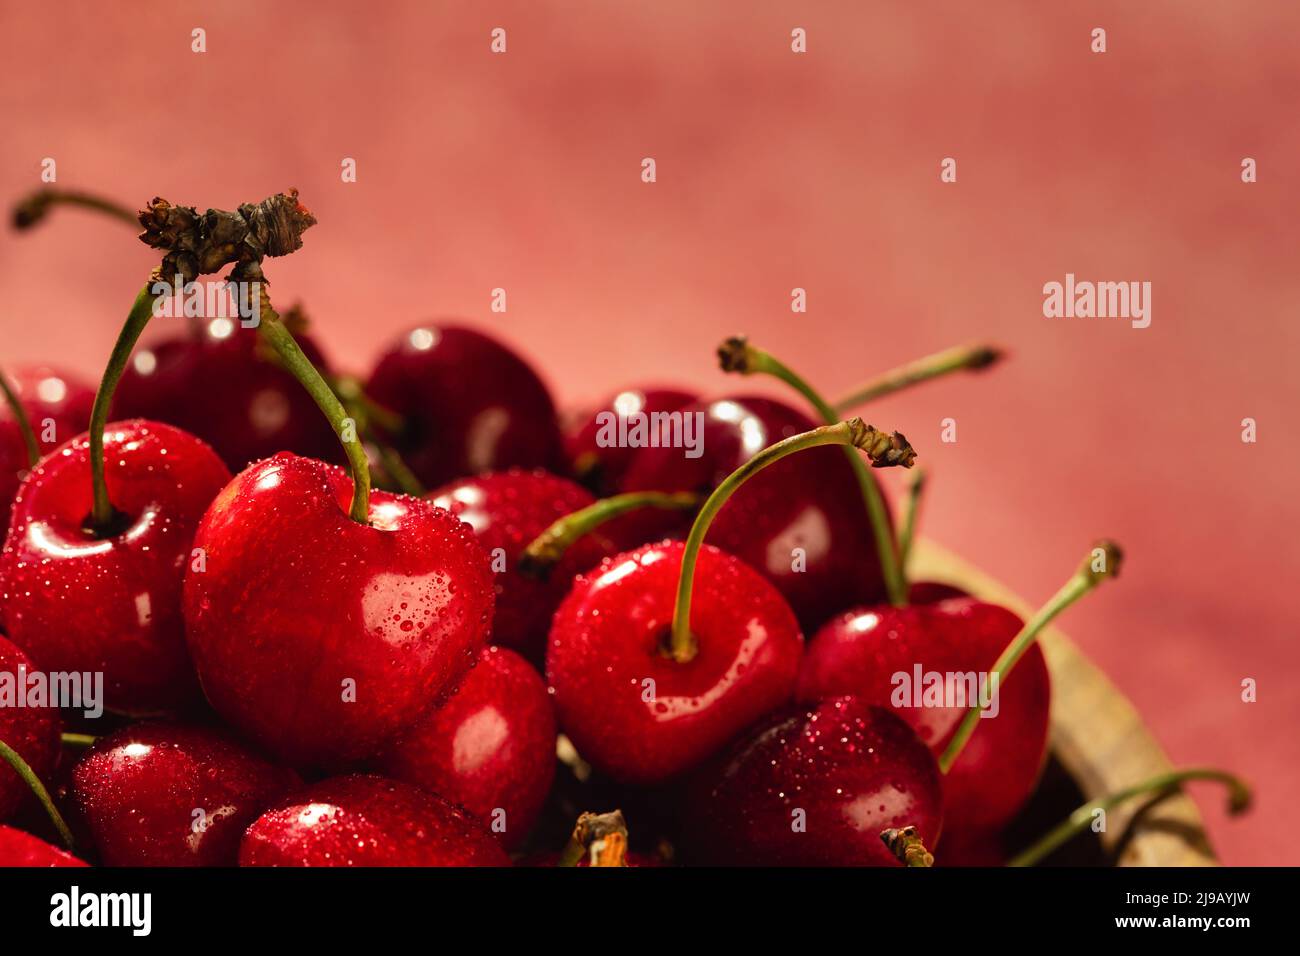 Vista angular de cerezas dulces maduras a la luz del sol sobre un fondo rojo. Foto de stock